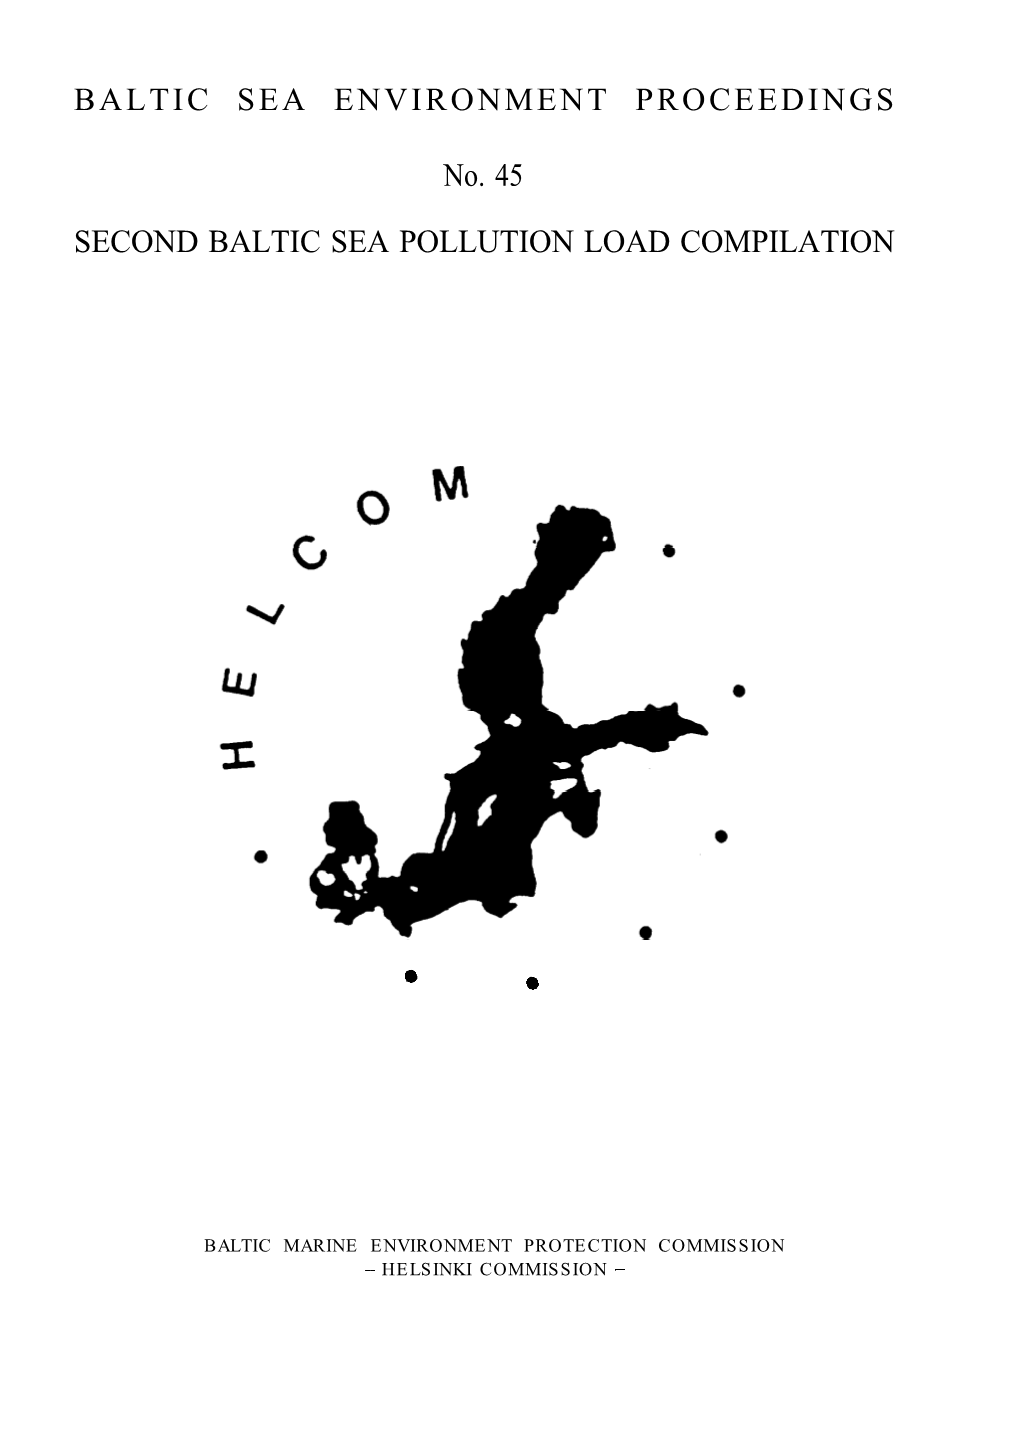 BALTIC SEA ENVIRONMENT PROCEEDINGS No. 45 SECOND